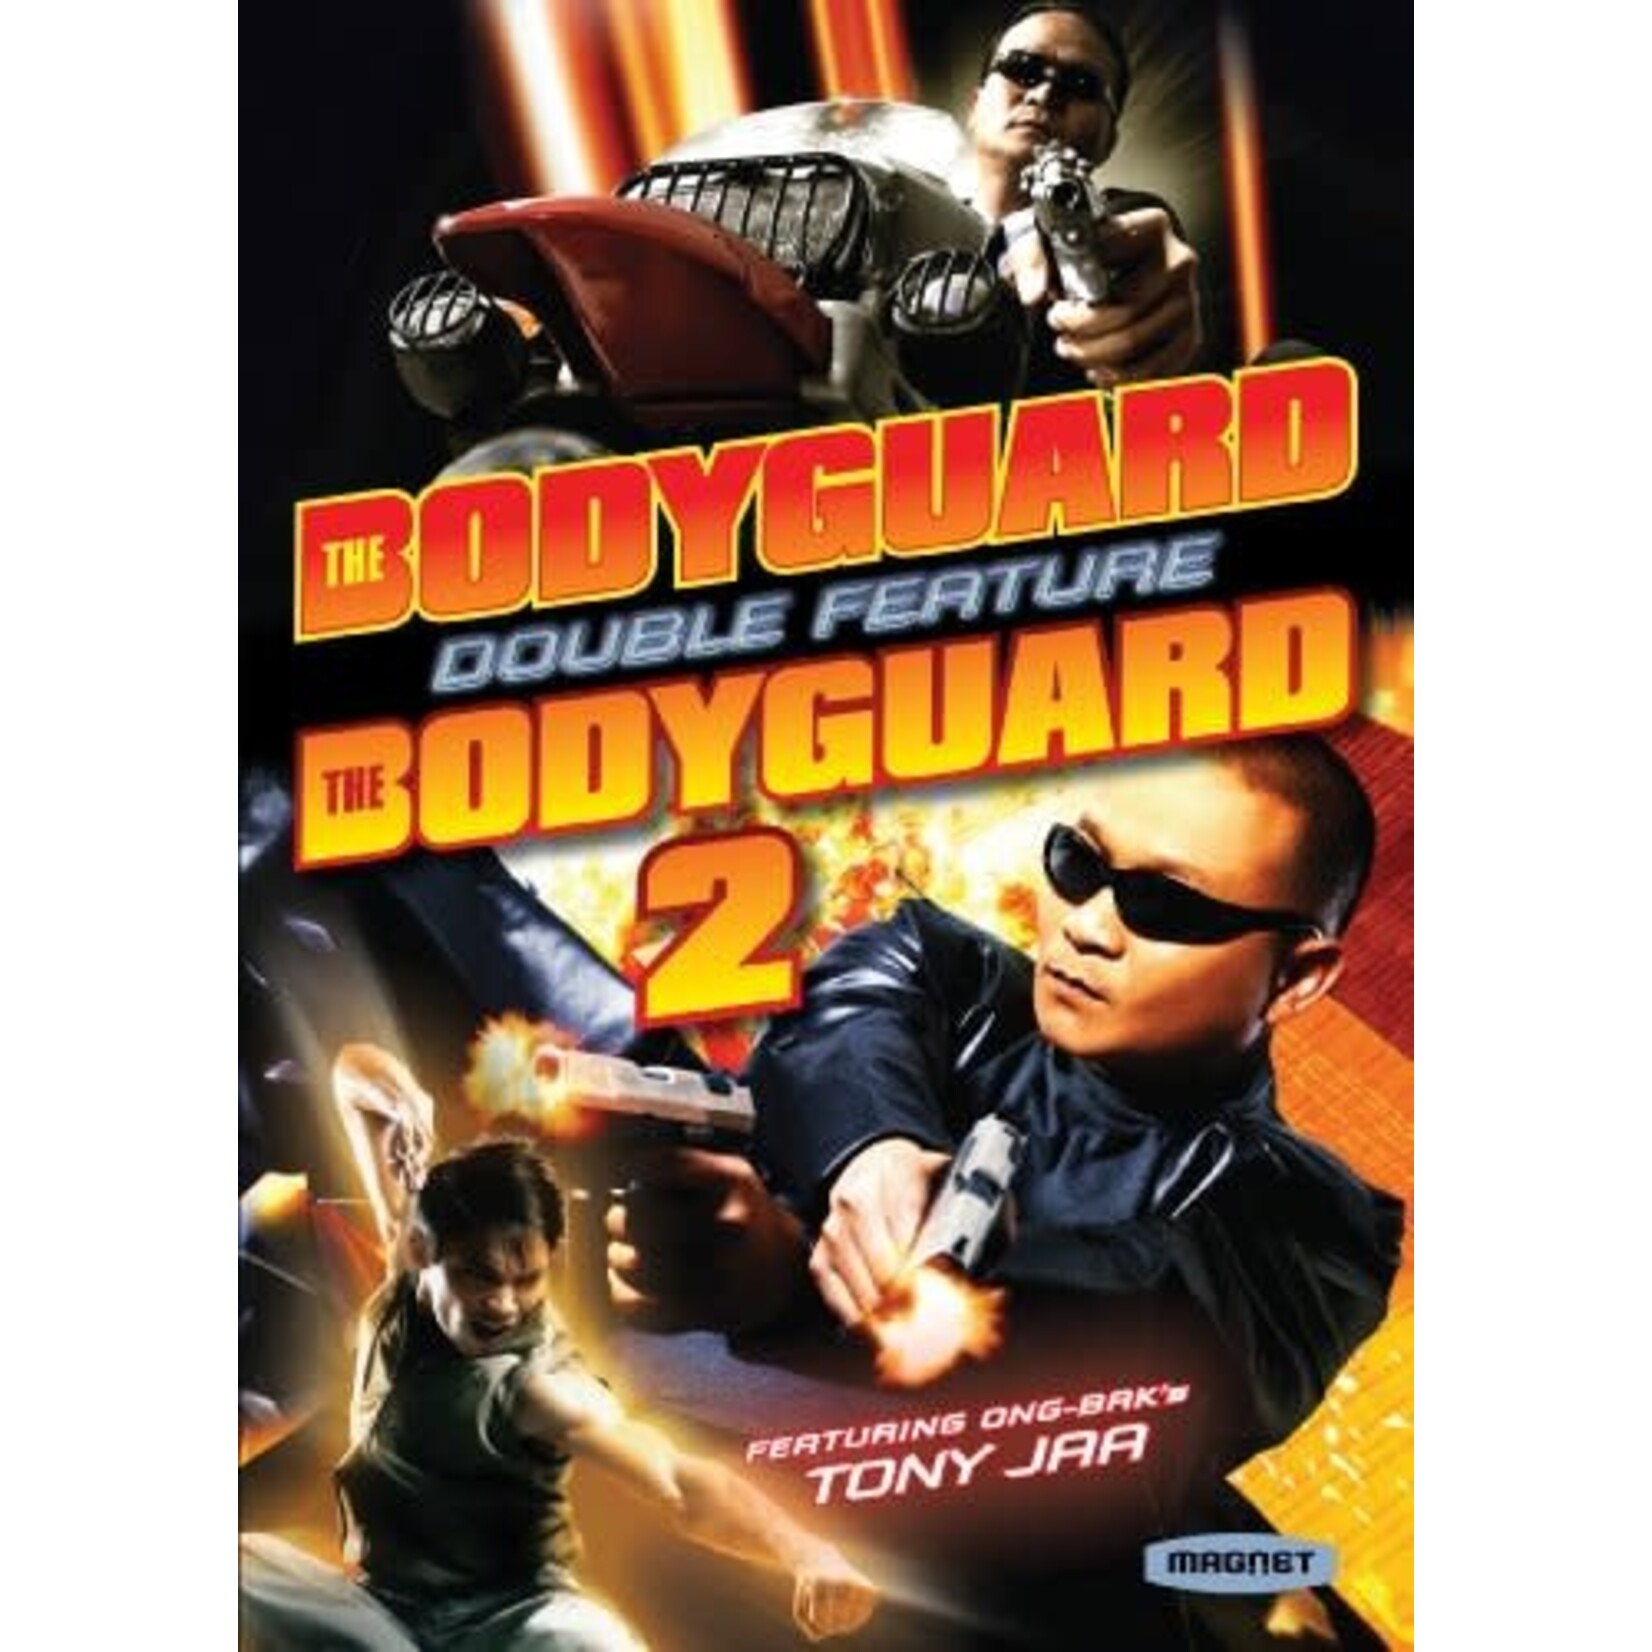 Bodyguard/Bodyguard 2 - Double Feature [USED 2DVD]